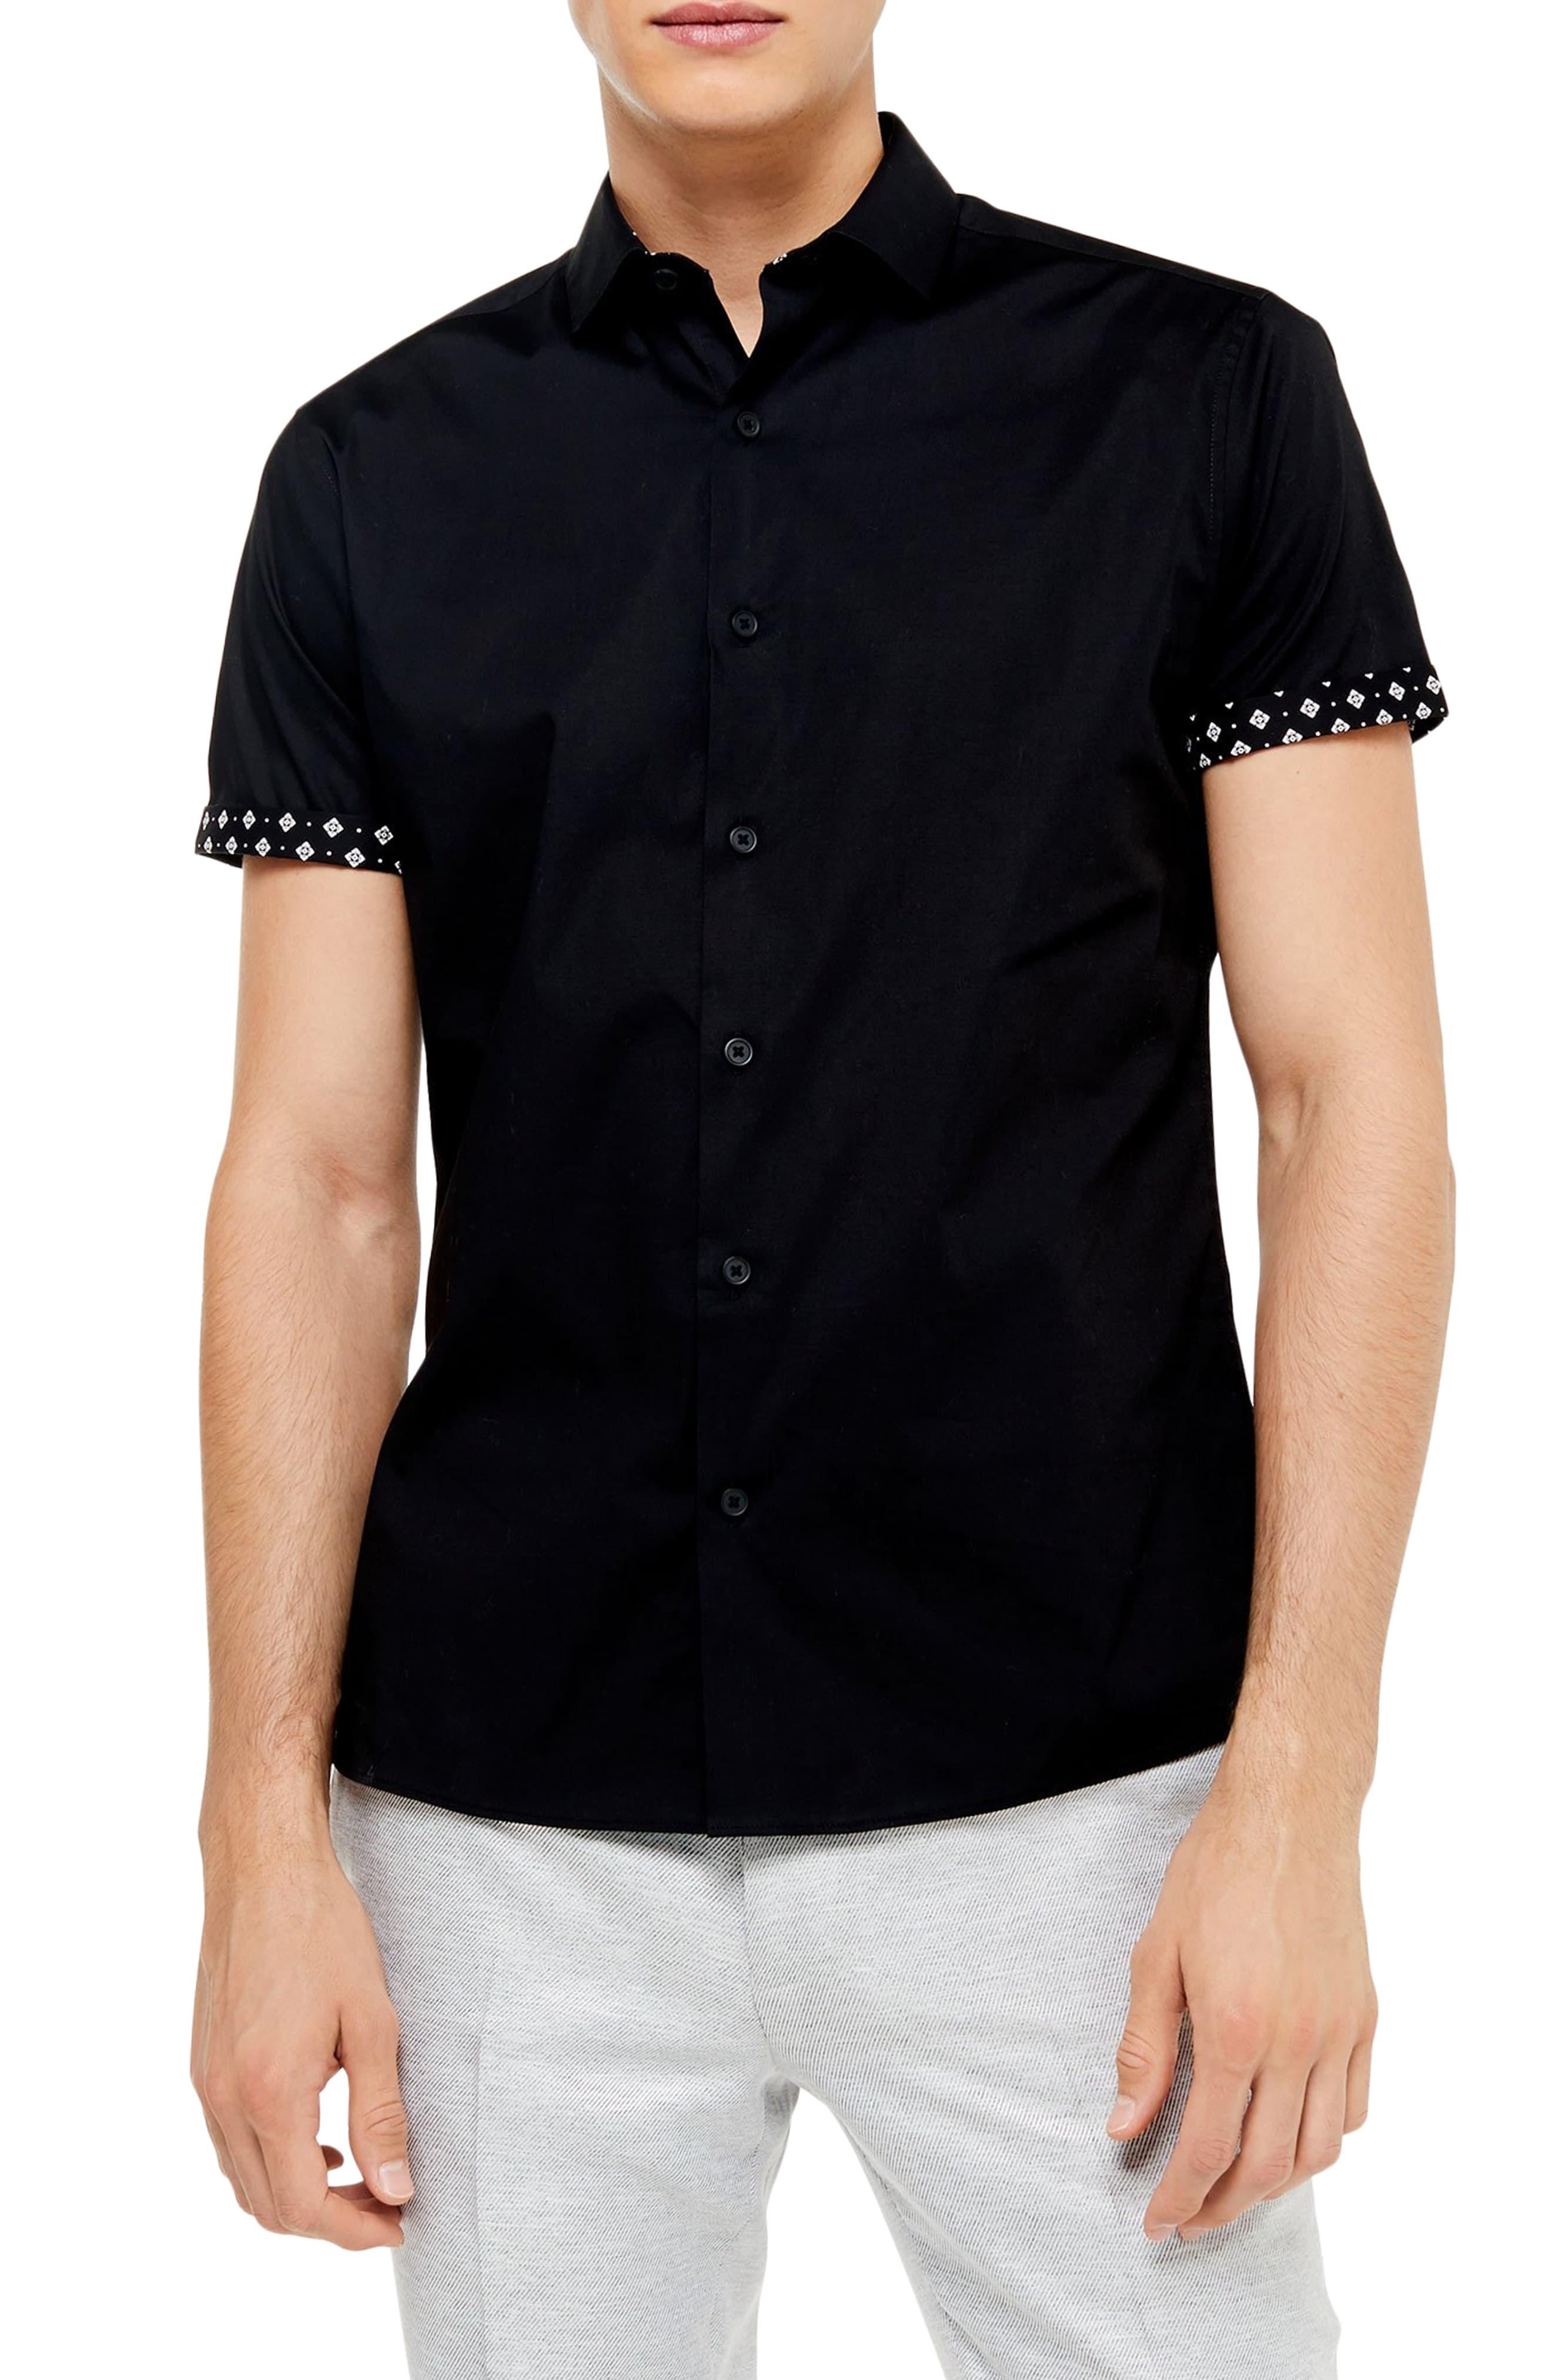 TOPMAN Slim Fit Short Sleeve Button-up Shirt in Black for Men - Lyst